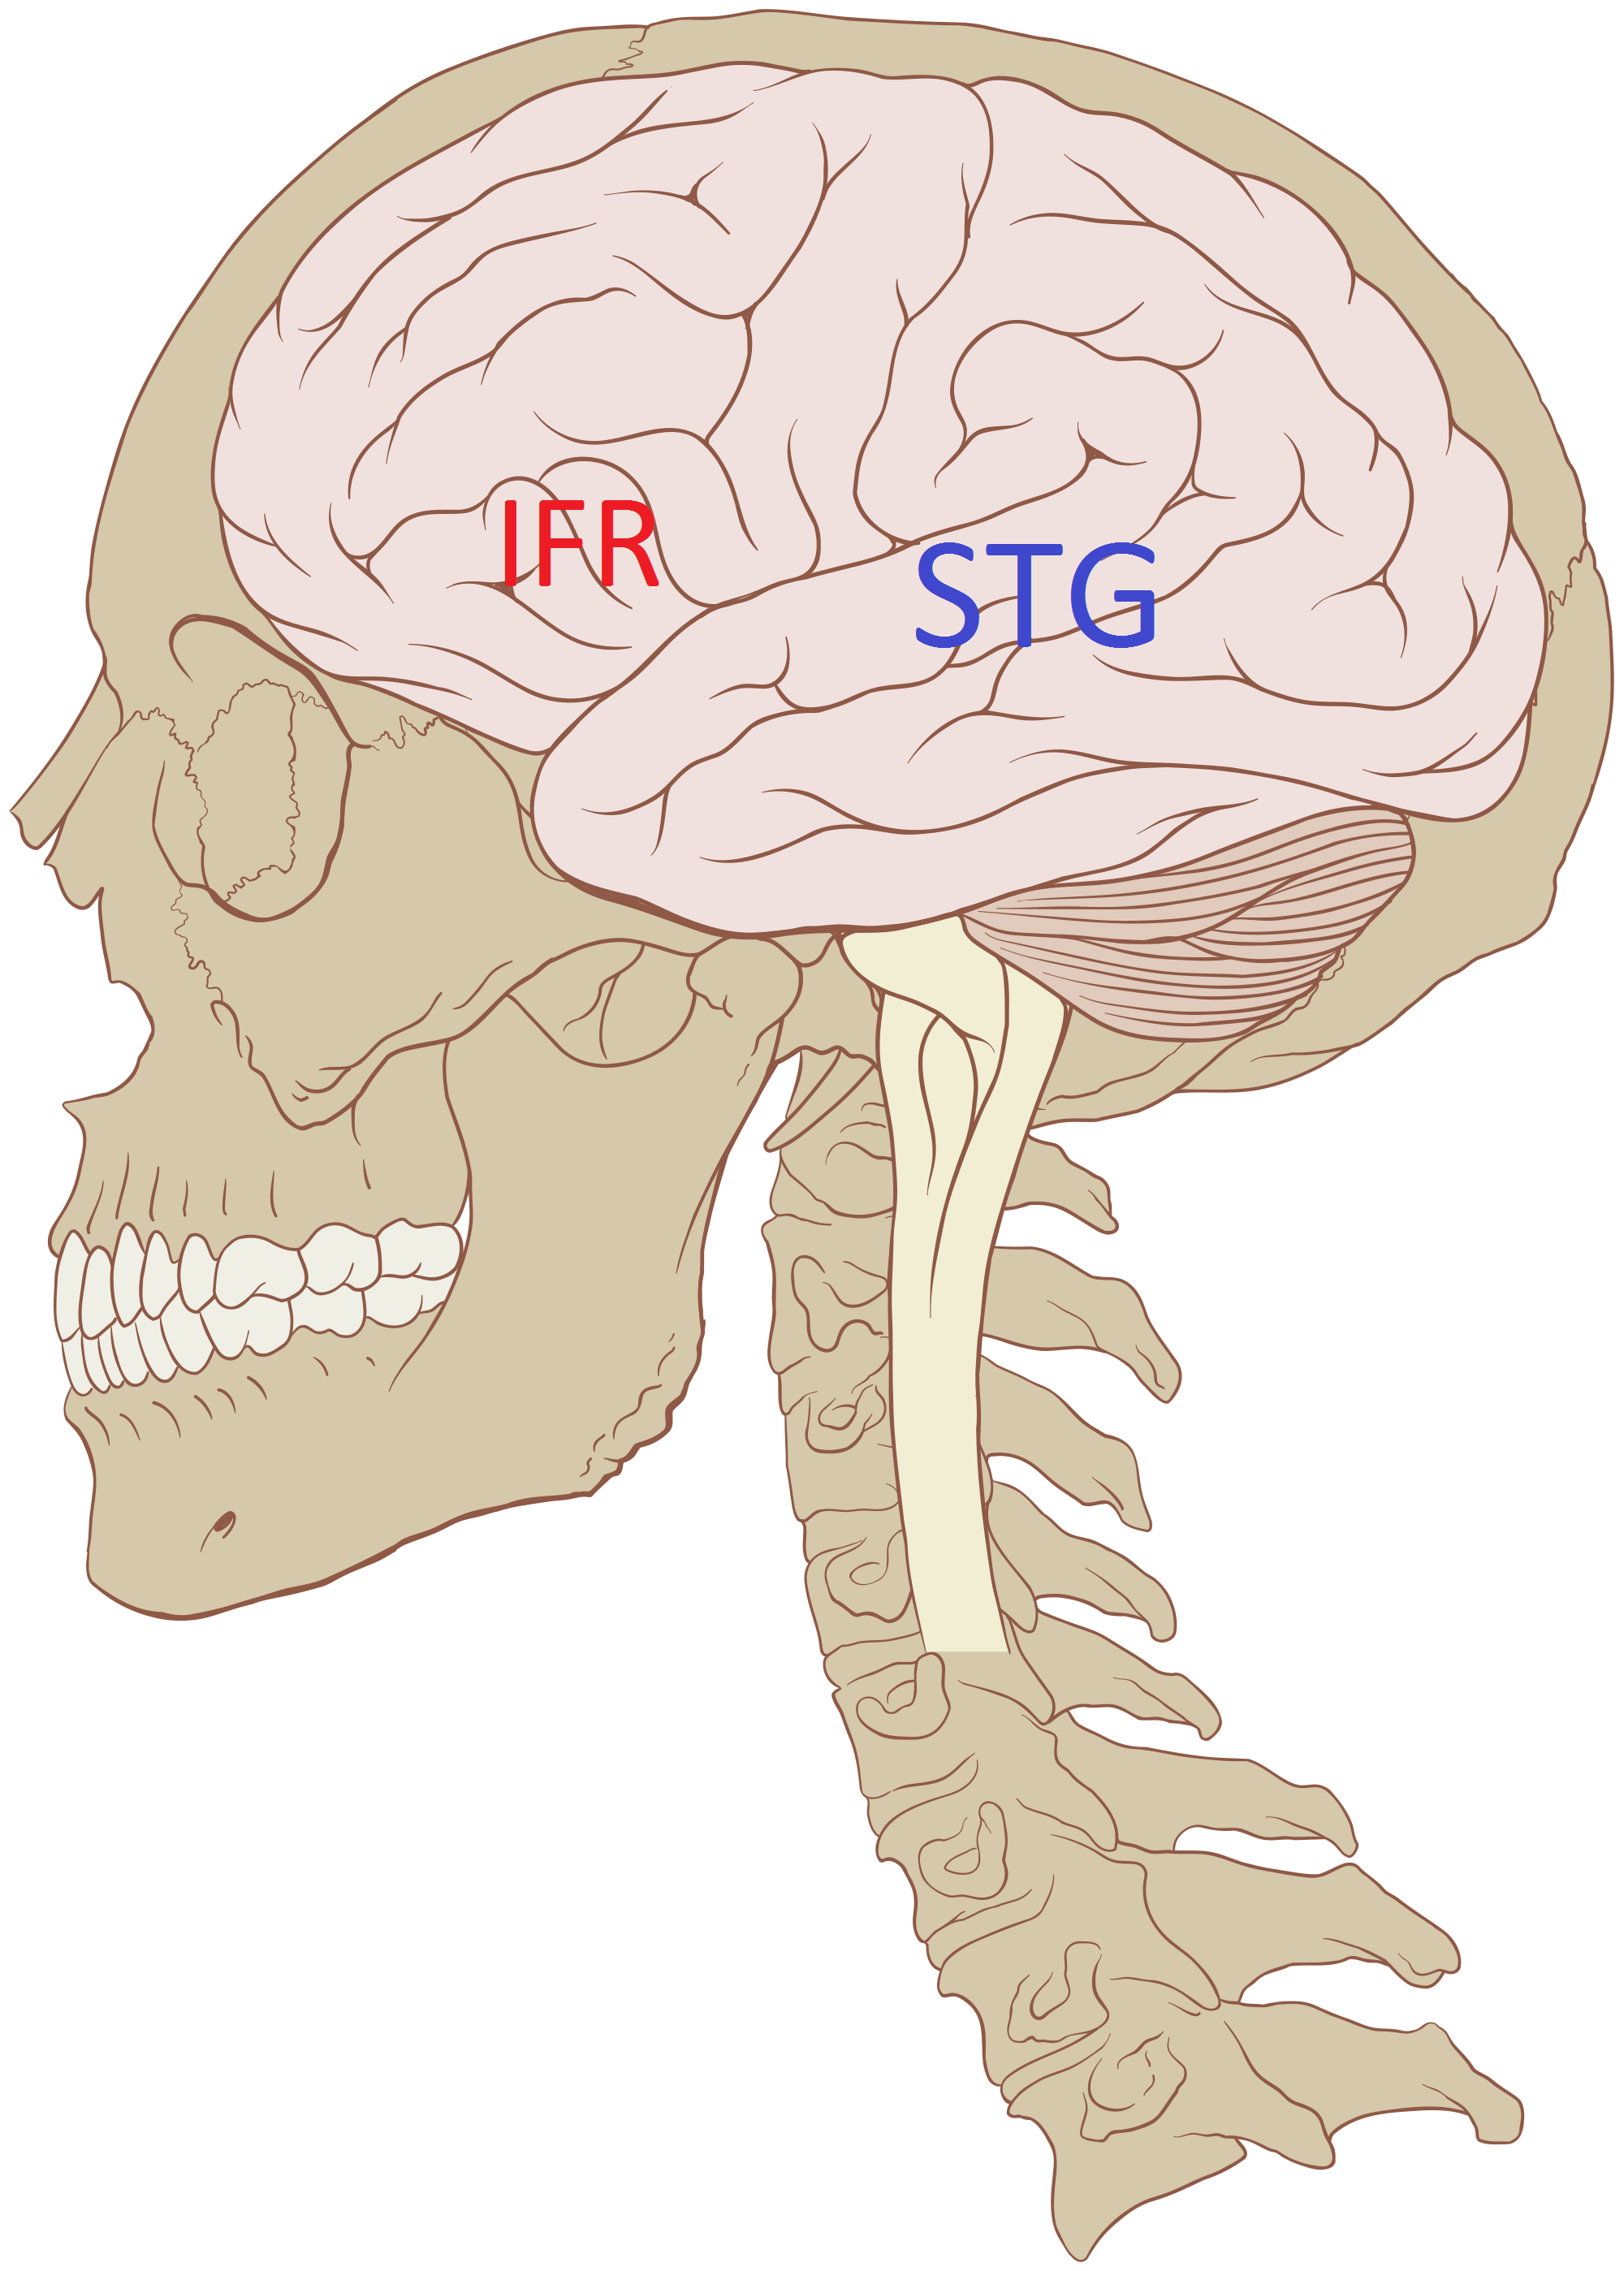 IFR=inferior frontális gyrus,STG=superior temporális gyrus